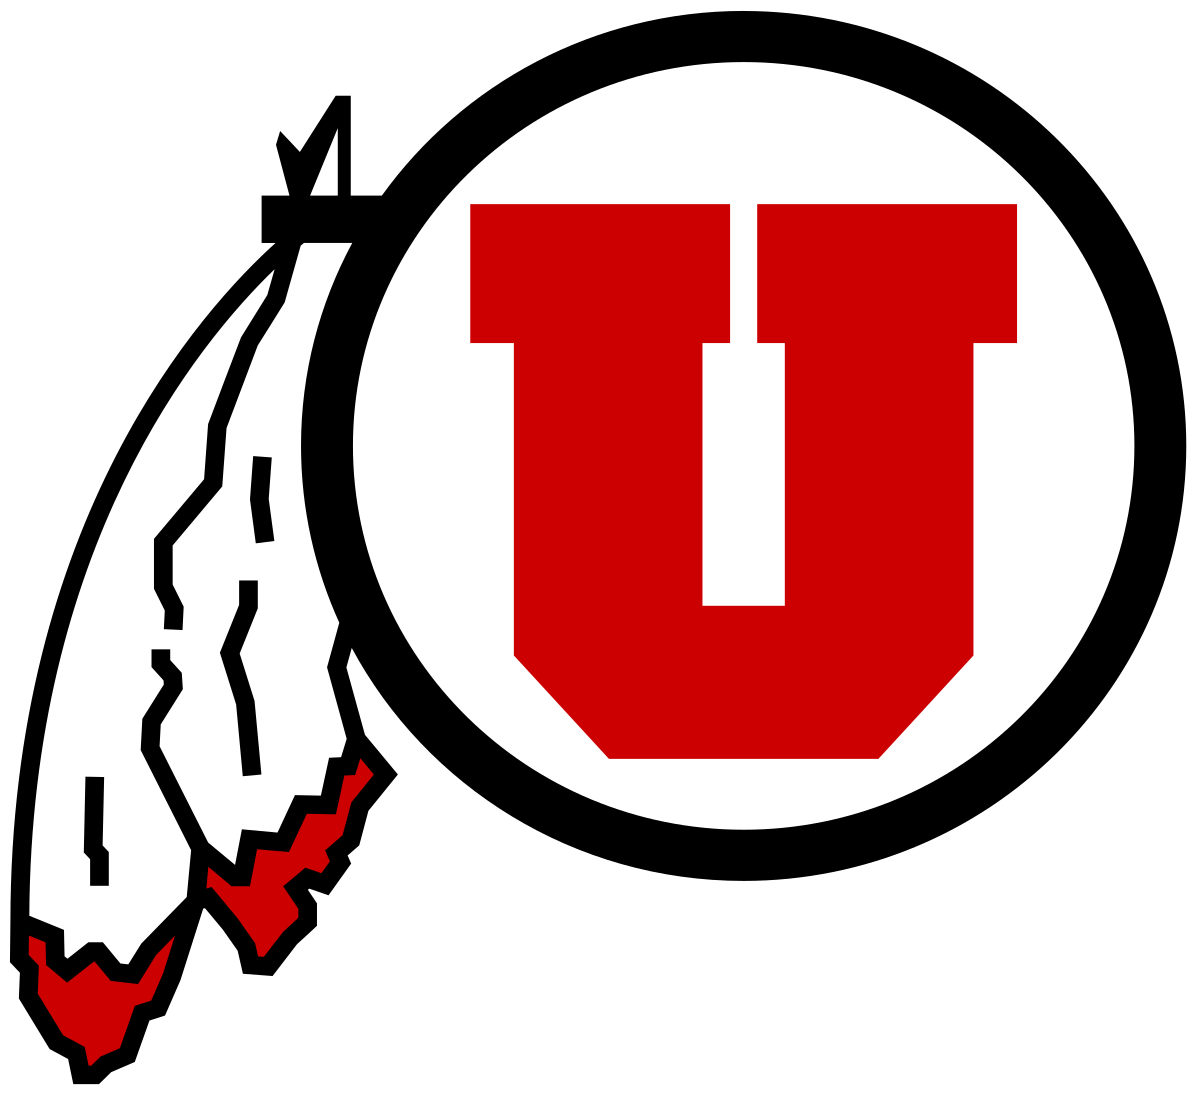 Utah Utes - Wikipedia